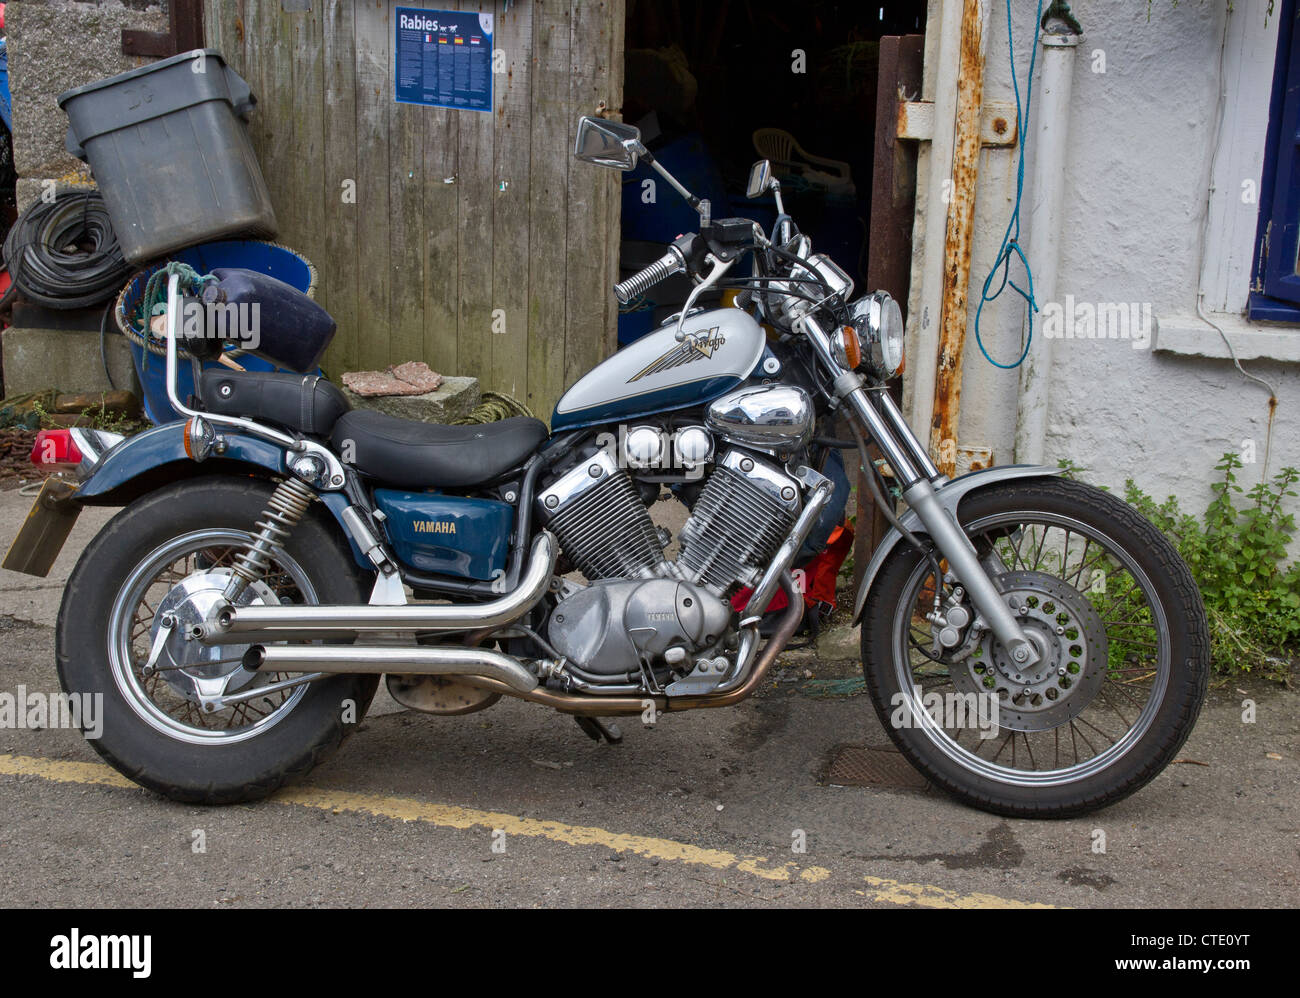 Yamaha bike hi-res stock photography and images - Alamy